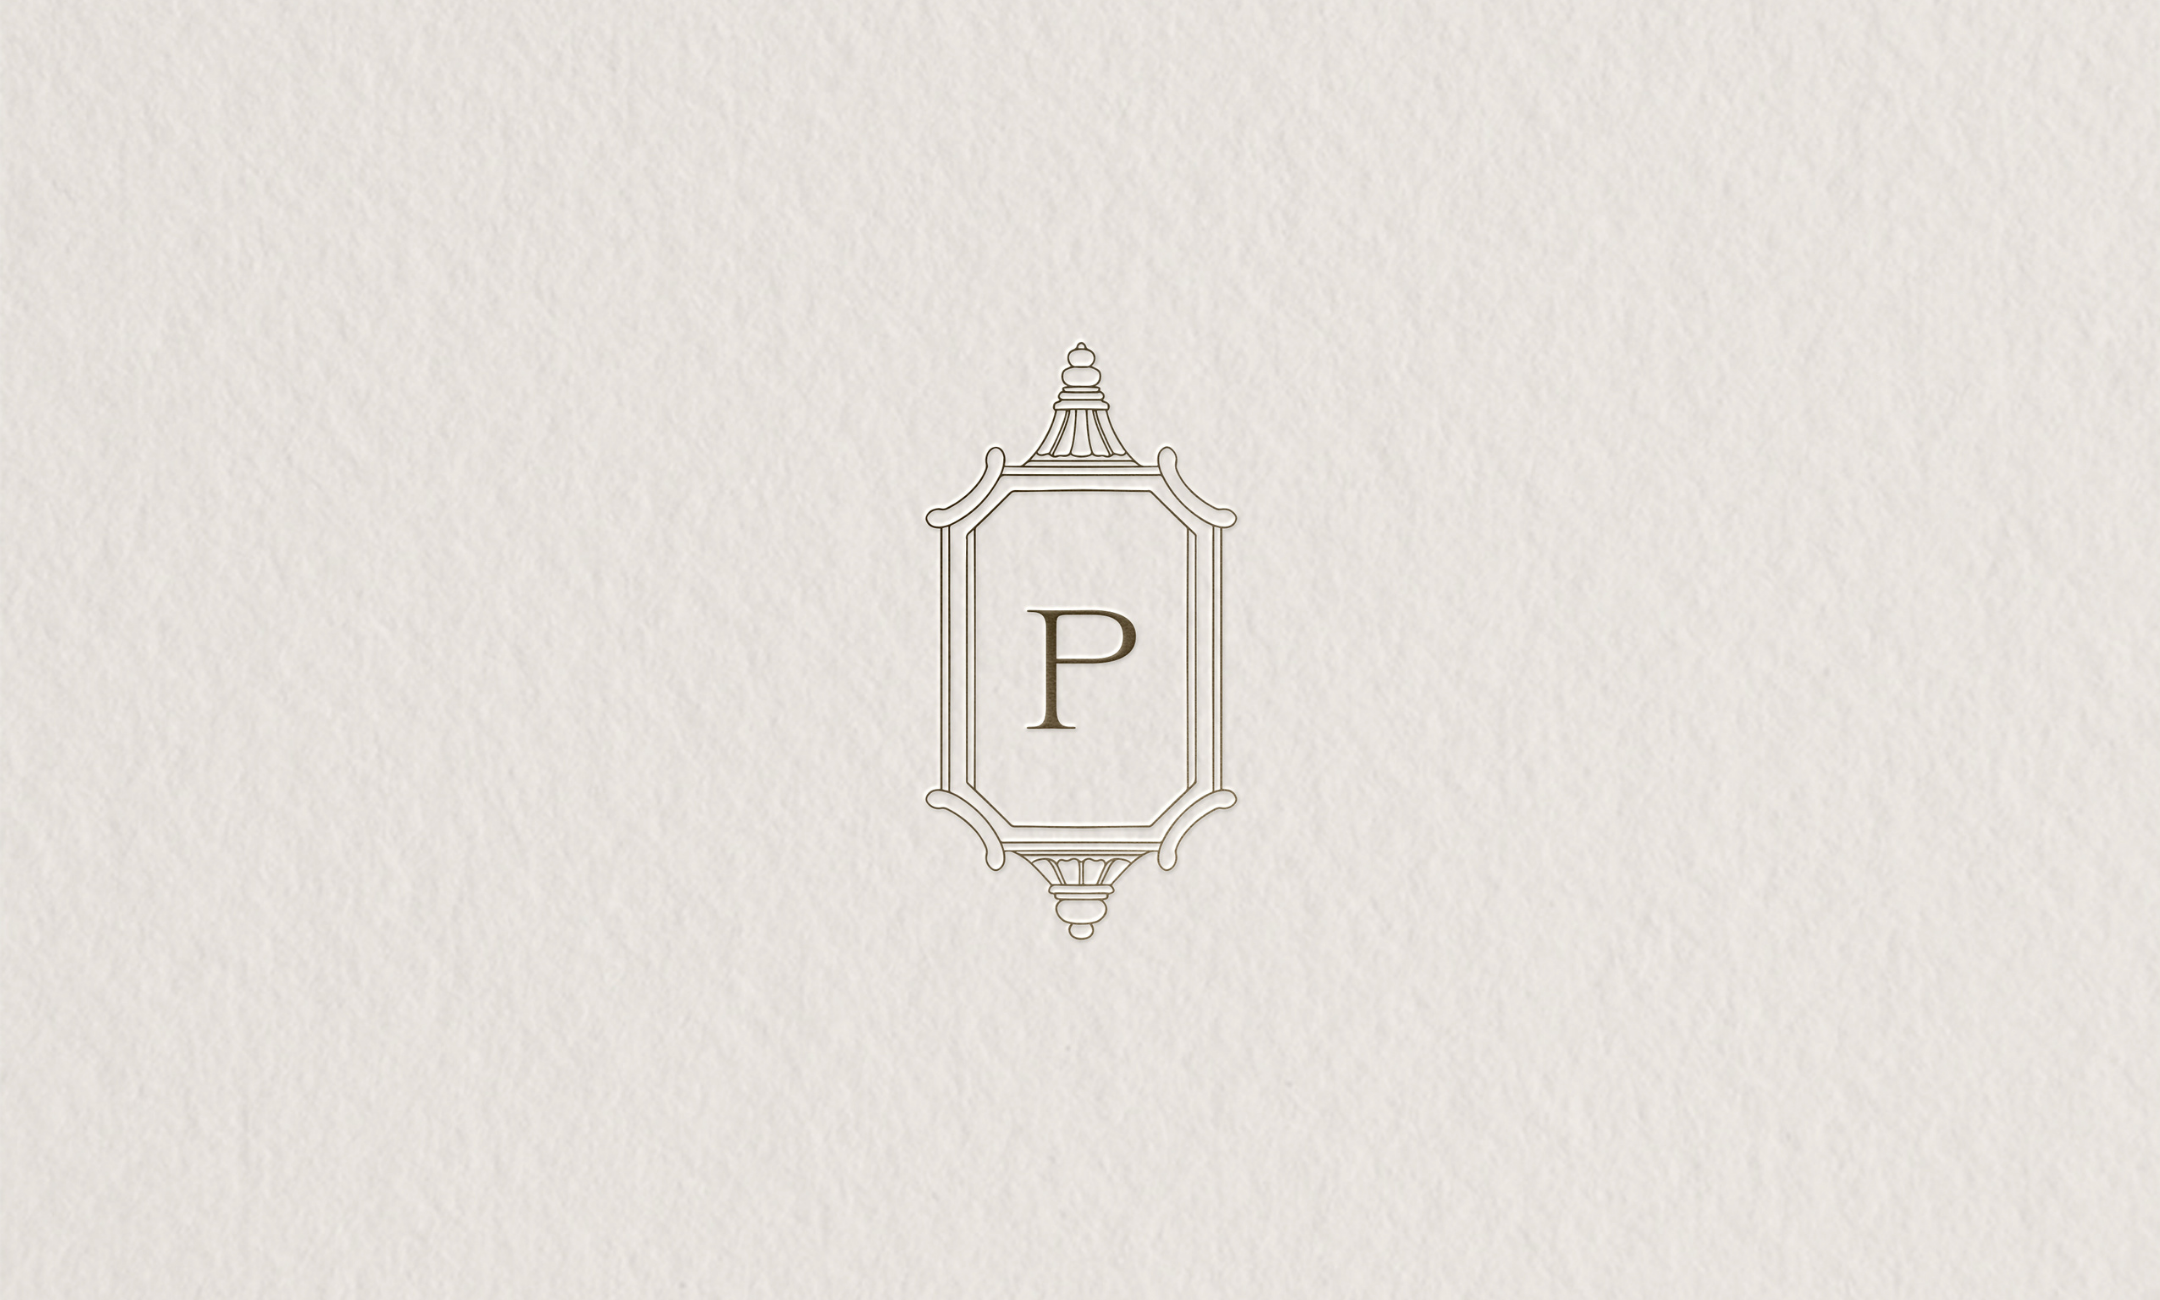 Panageries - Interior Designer Logo and Brand Identity - Sarah Ann Design